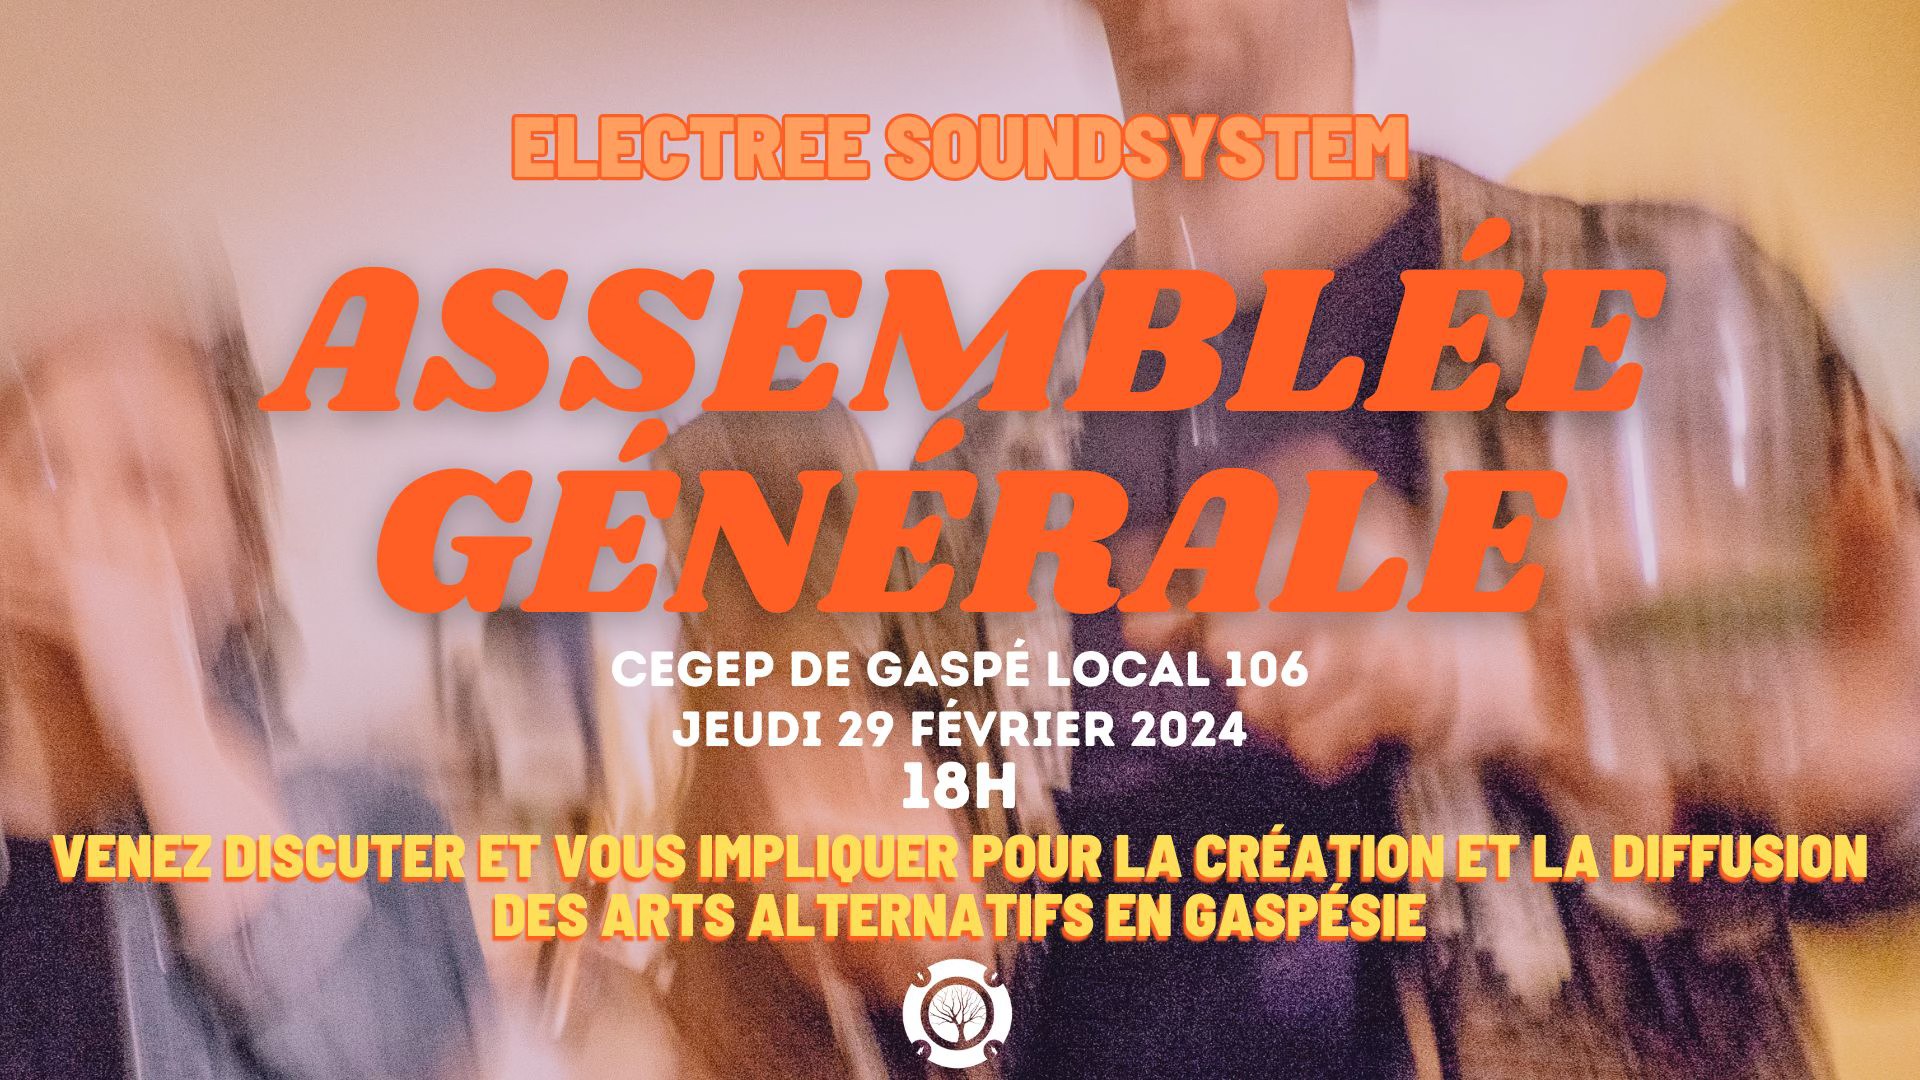 Assemblée Générale - Electree Soundsystem